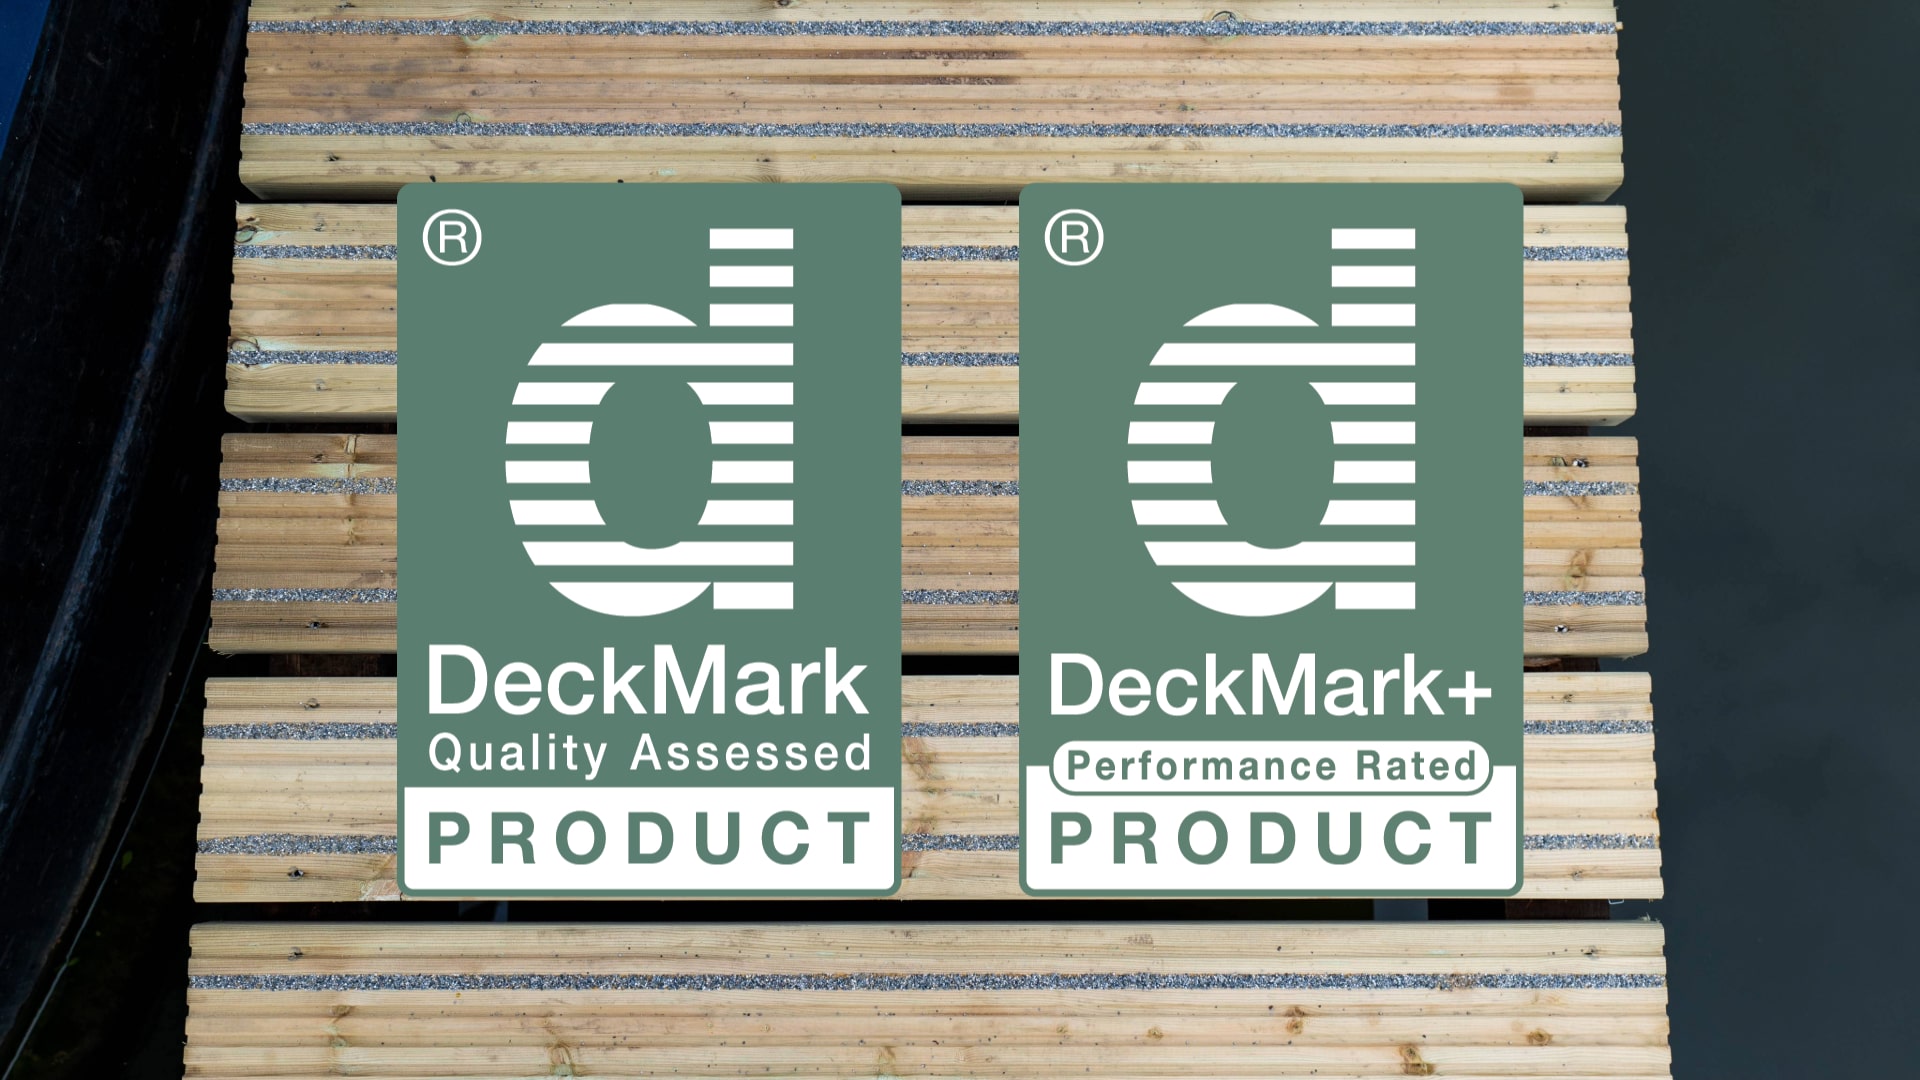 DeckWright’s Anti-Slip Decking Boards Receive Prestigious DeckMark+ Performance Rating by TDCA